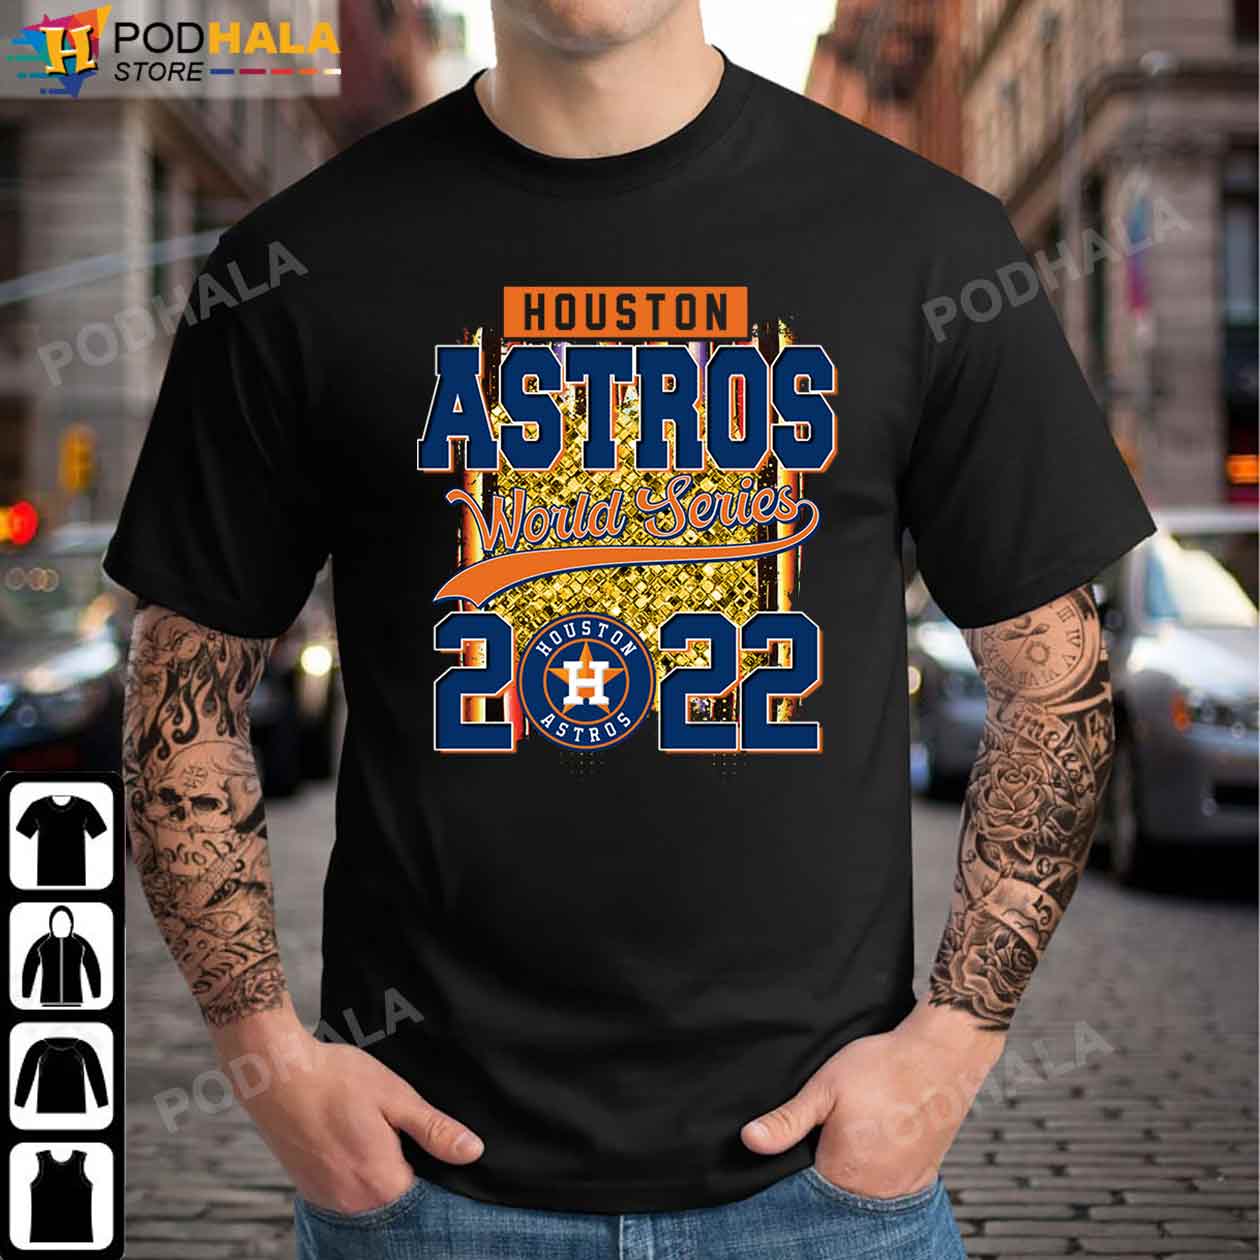 houston astros world series champion t shirts